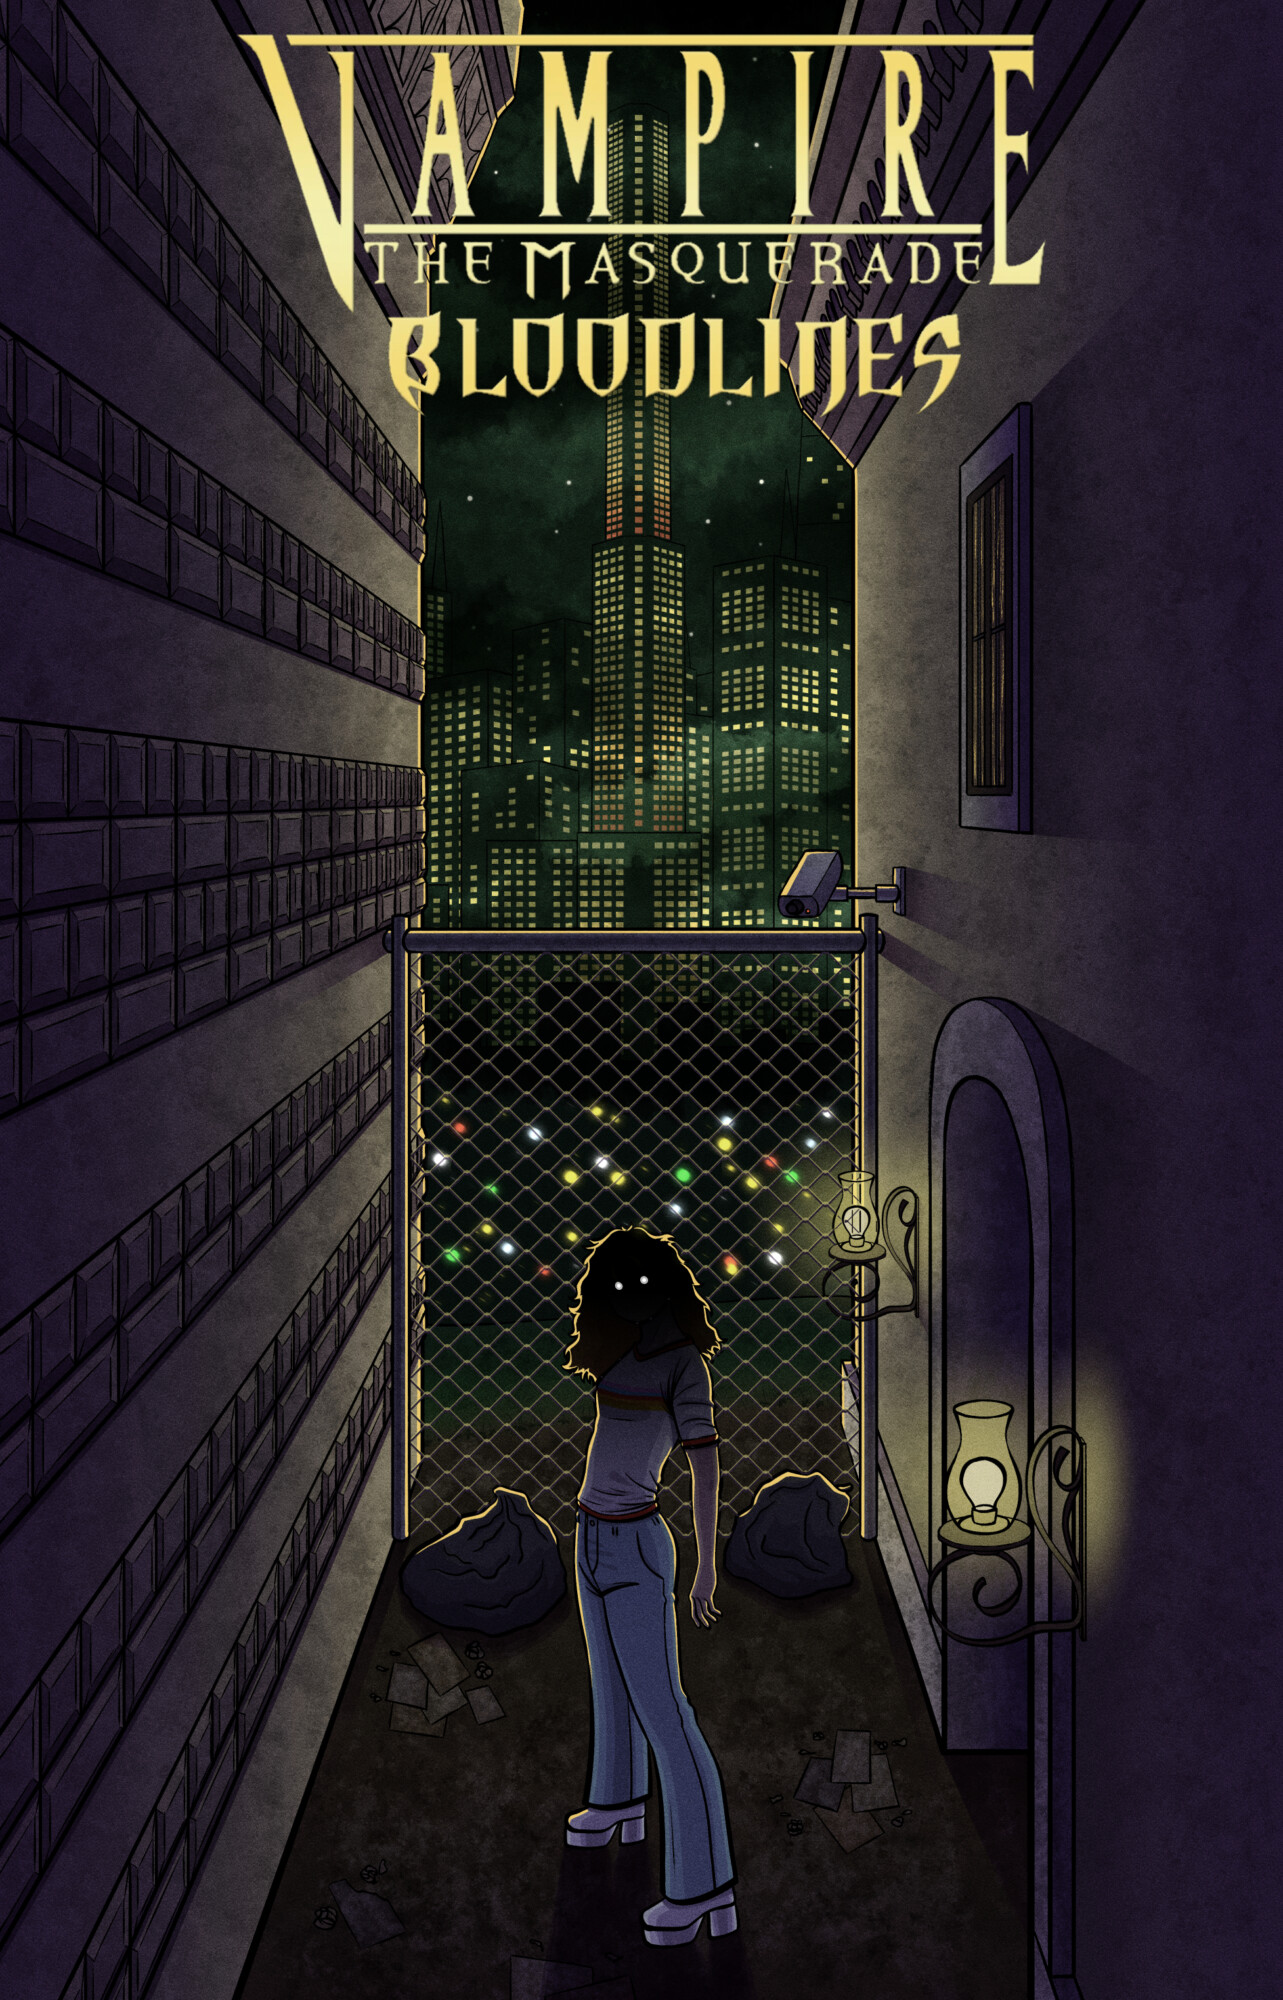 Vampire: The Masquerade – Bloodlines